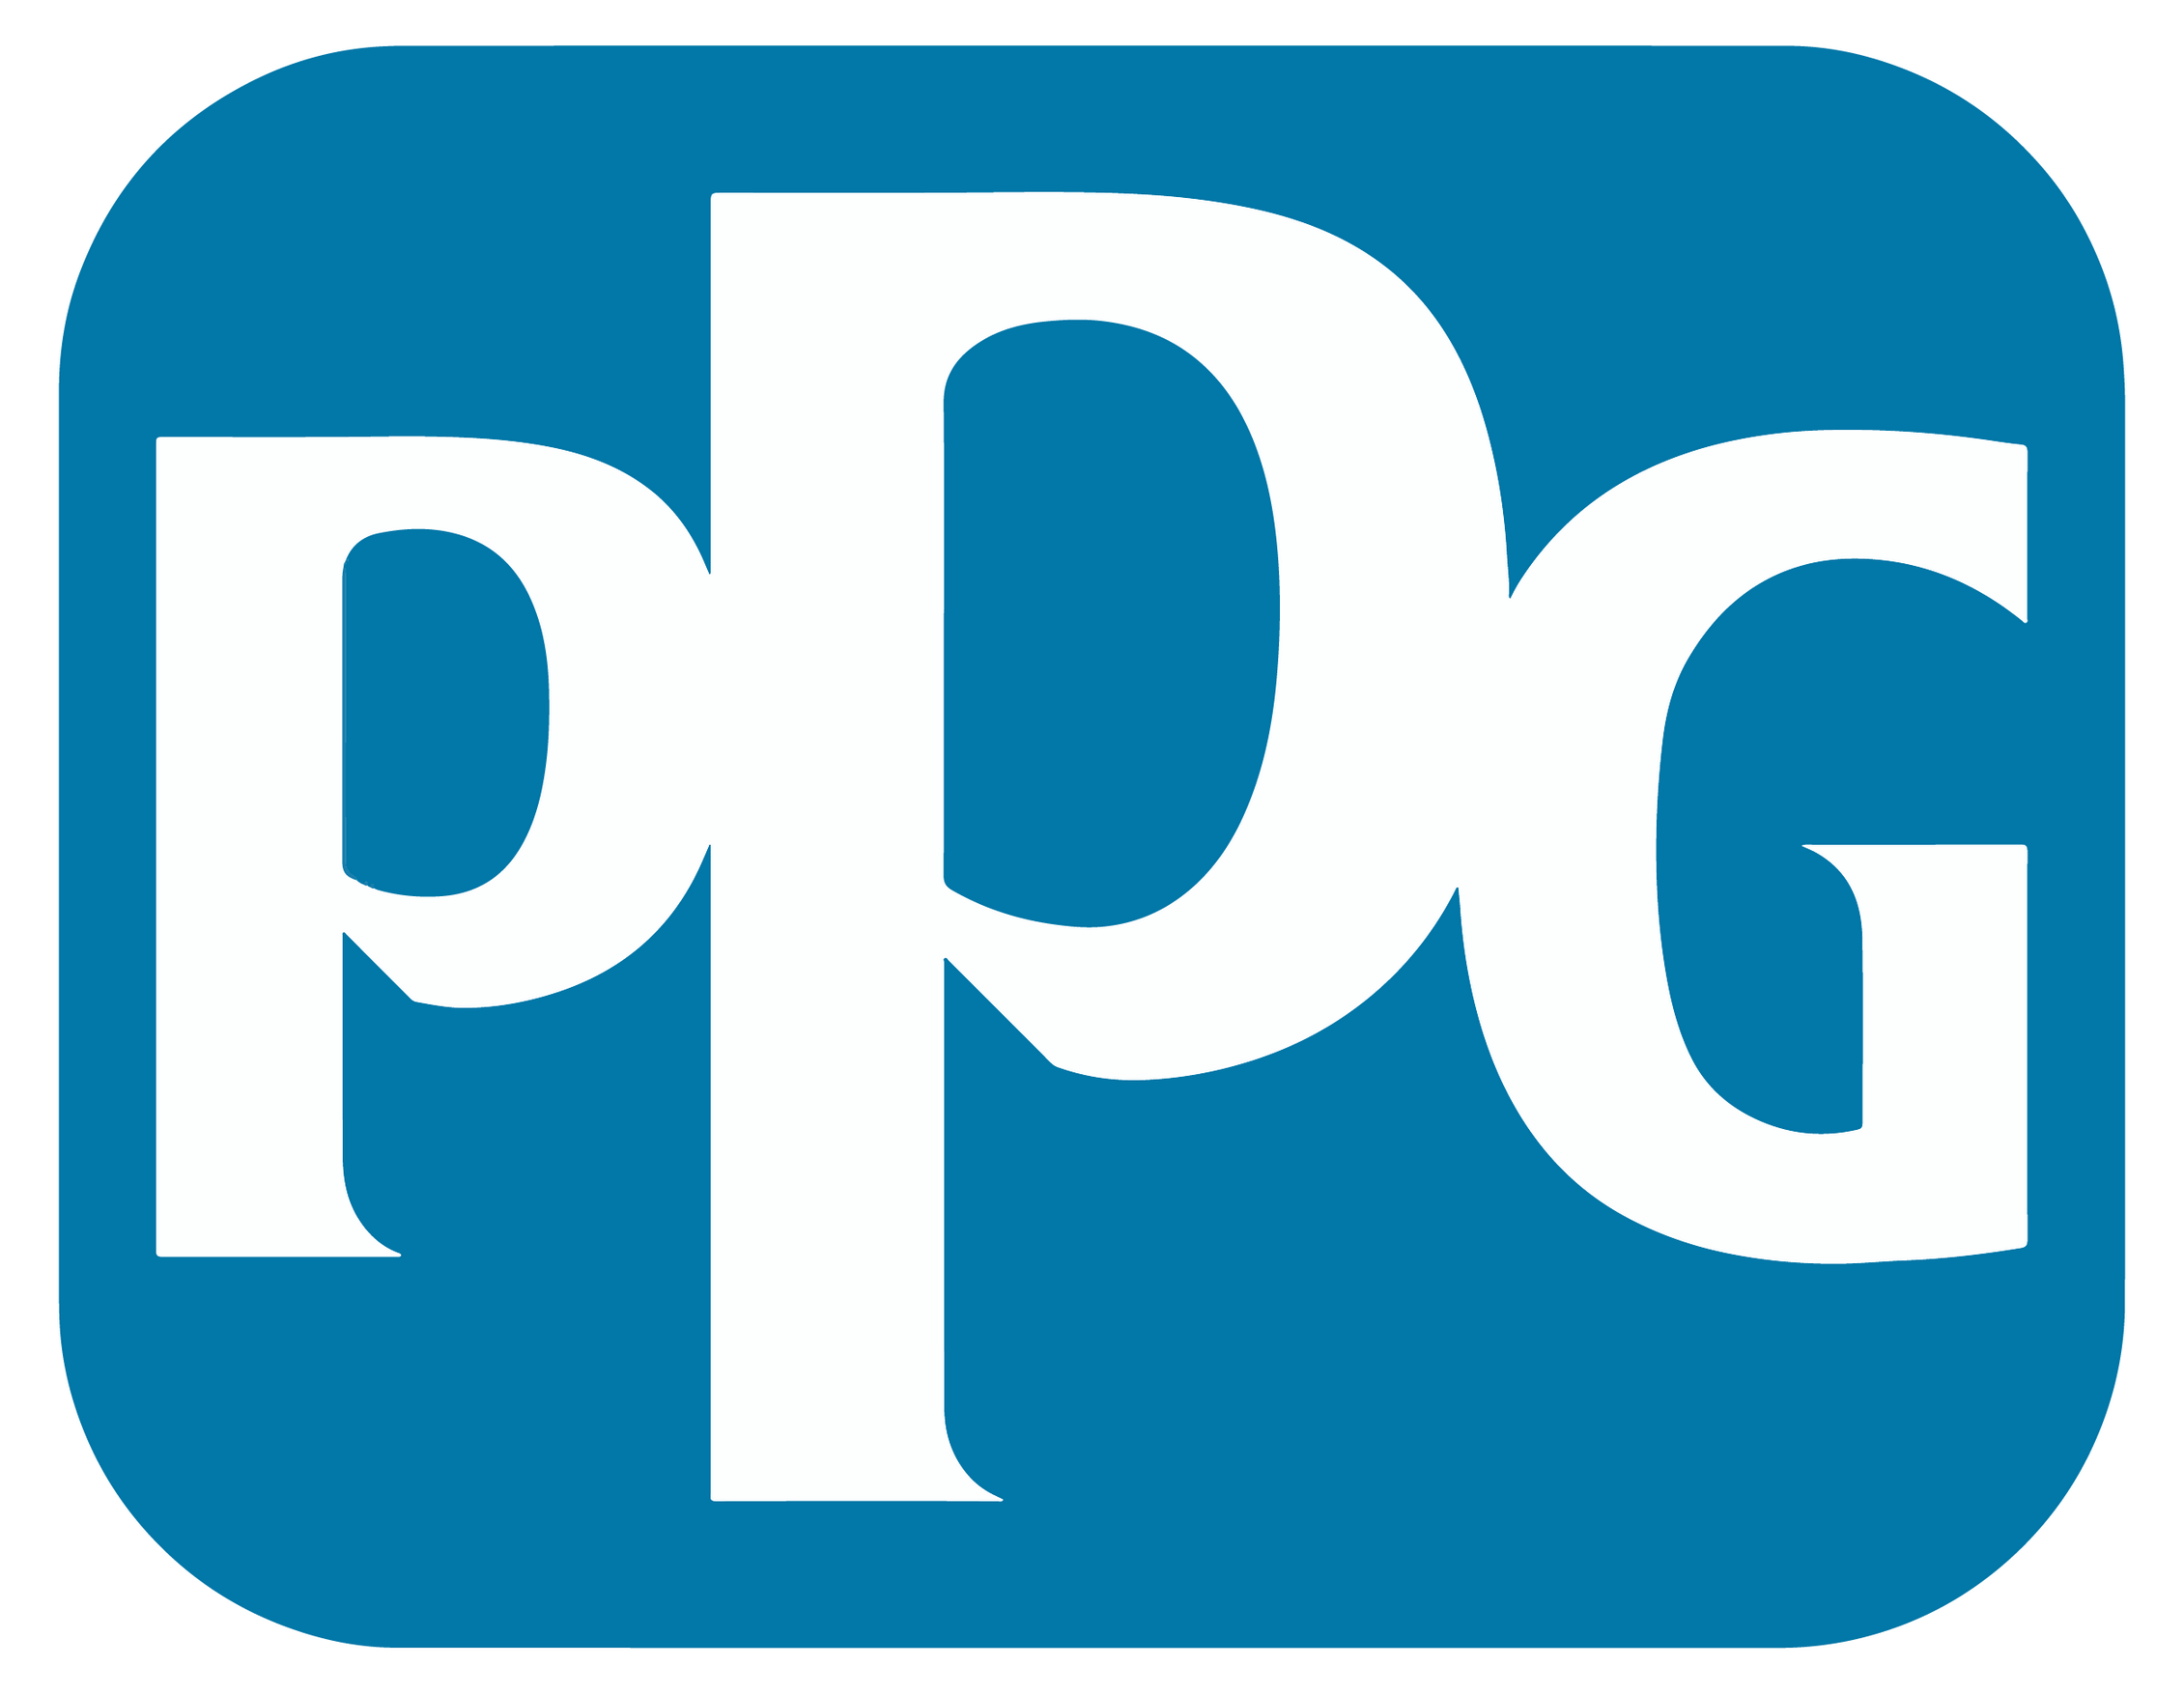 PPG Industries Logo [EPS-PDF]